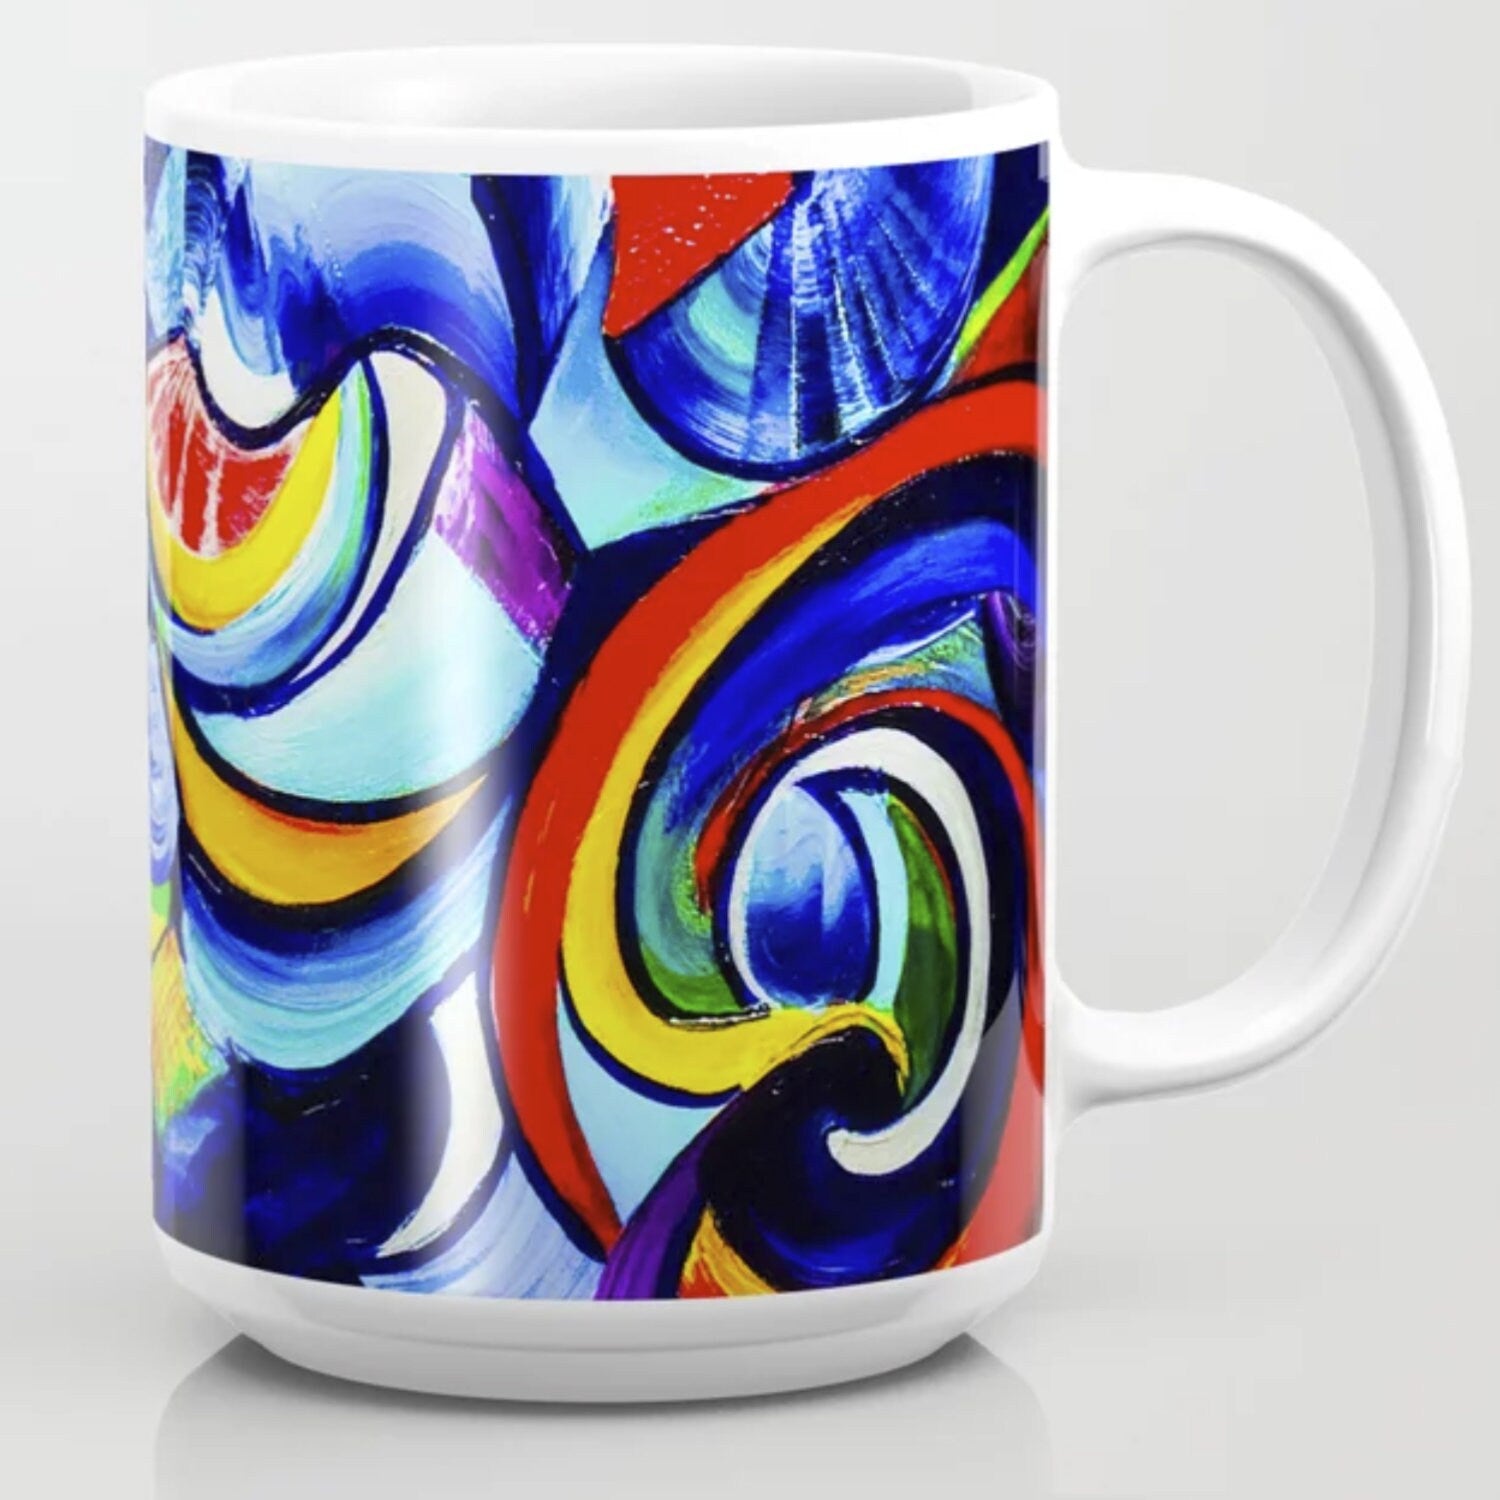 Colorful Abstract Mug Unique Artsy Gift for Art Lovers 15oz cheap gift Abstract Art Colorful Mugs graffiti mug psychadelic